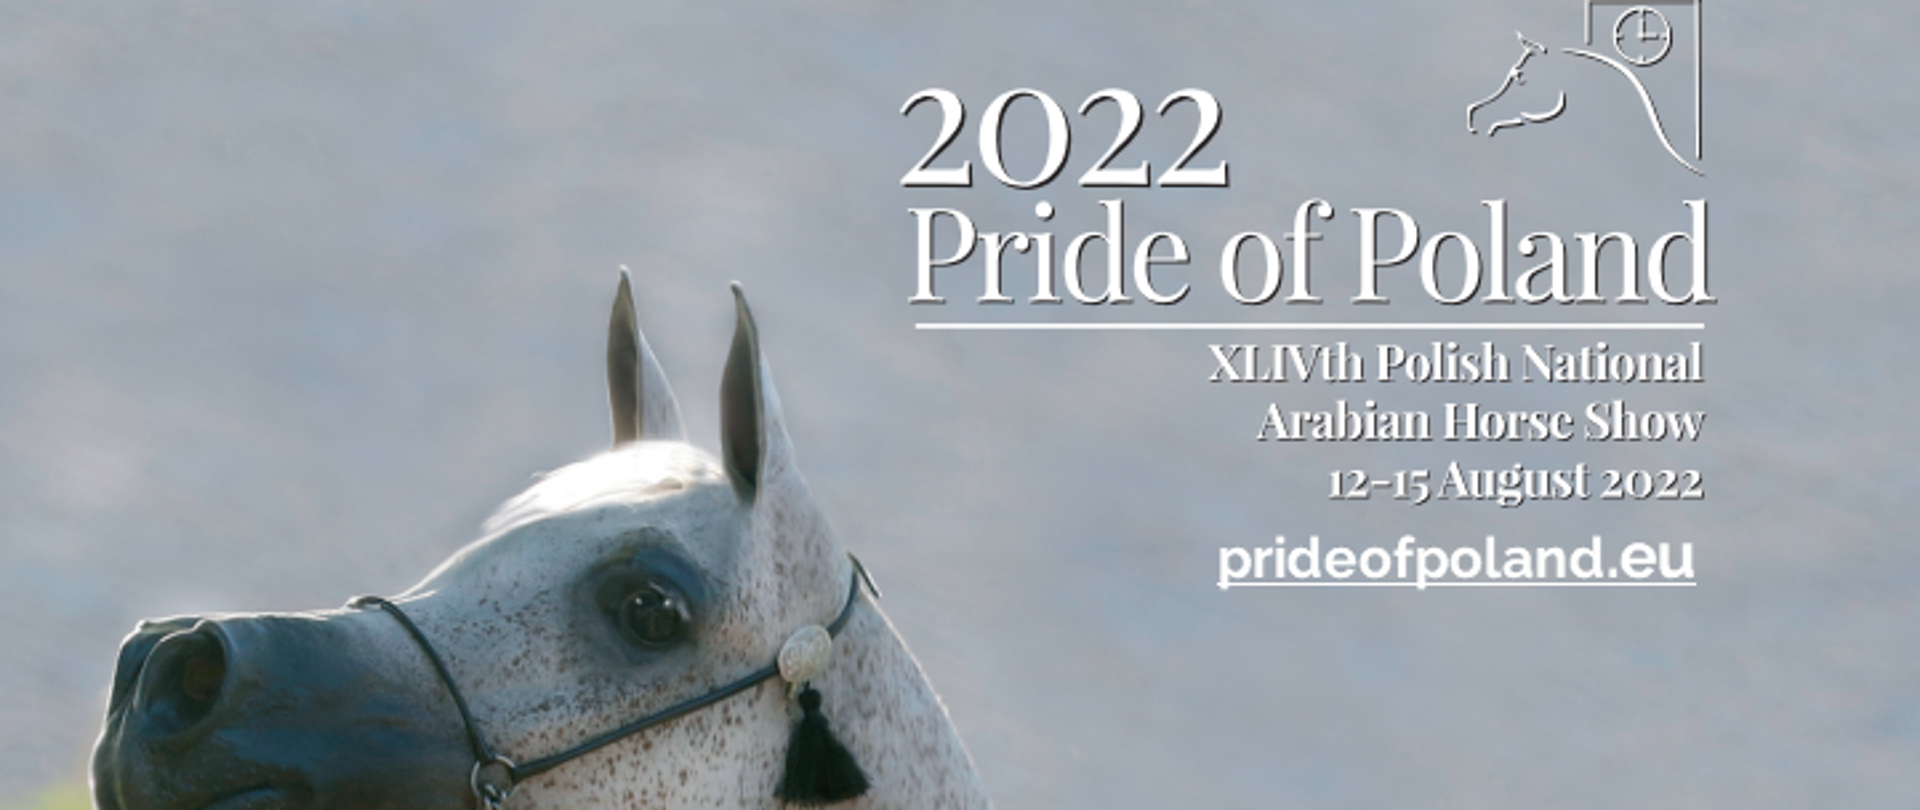 Pride of Poland 2022